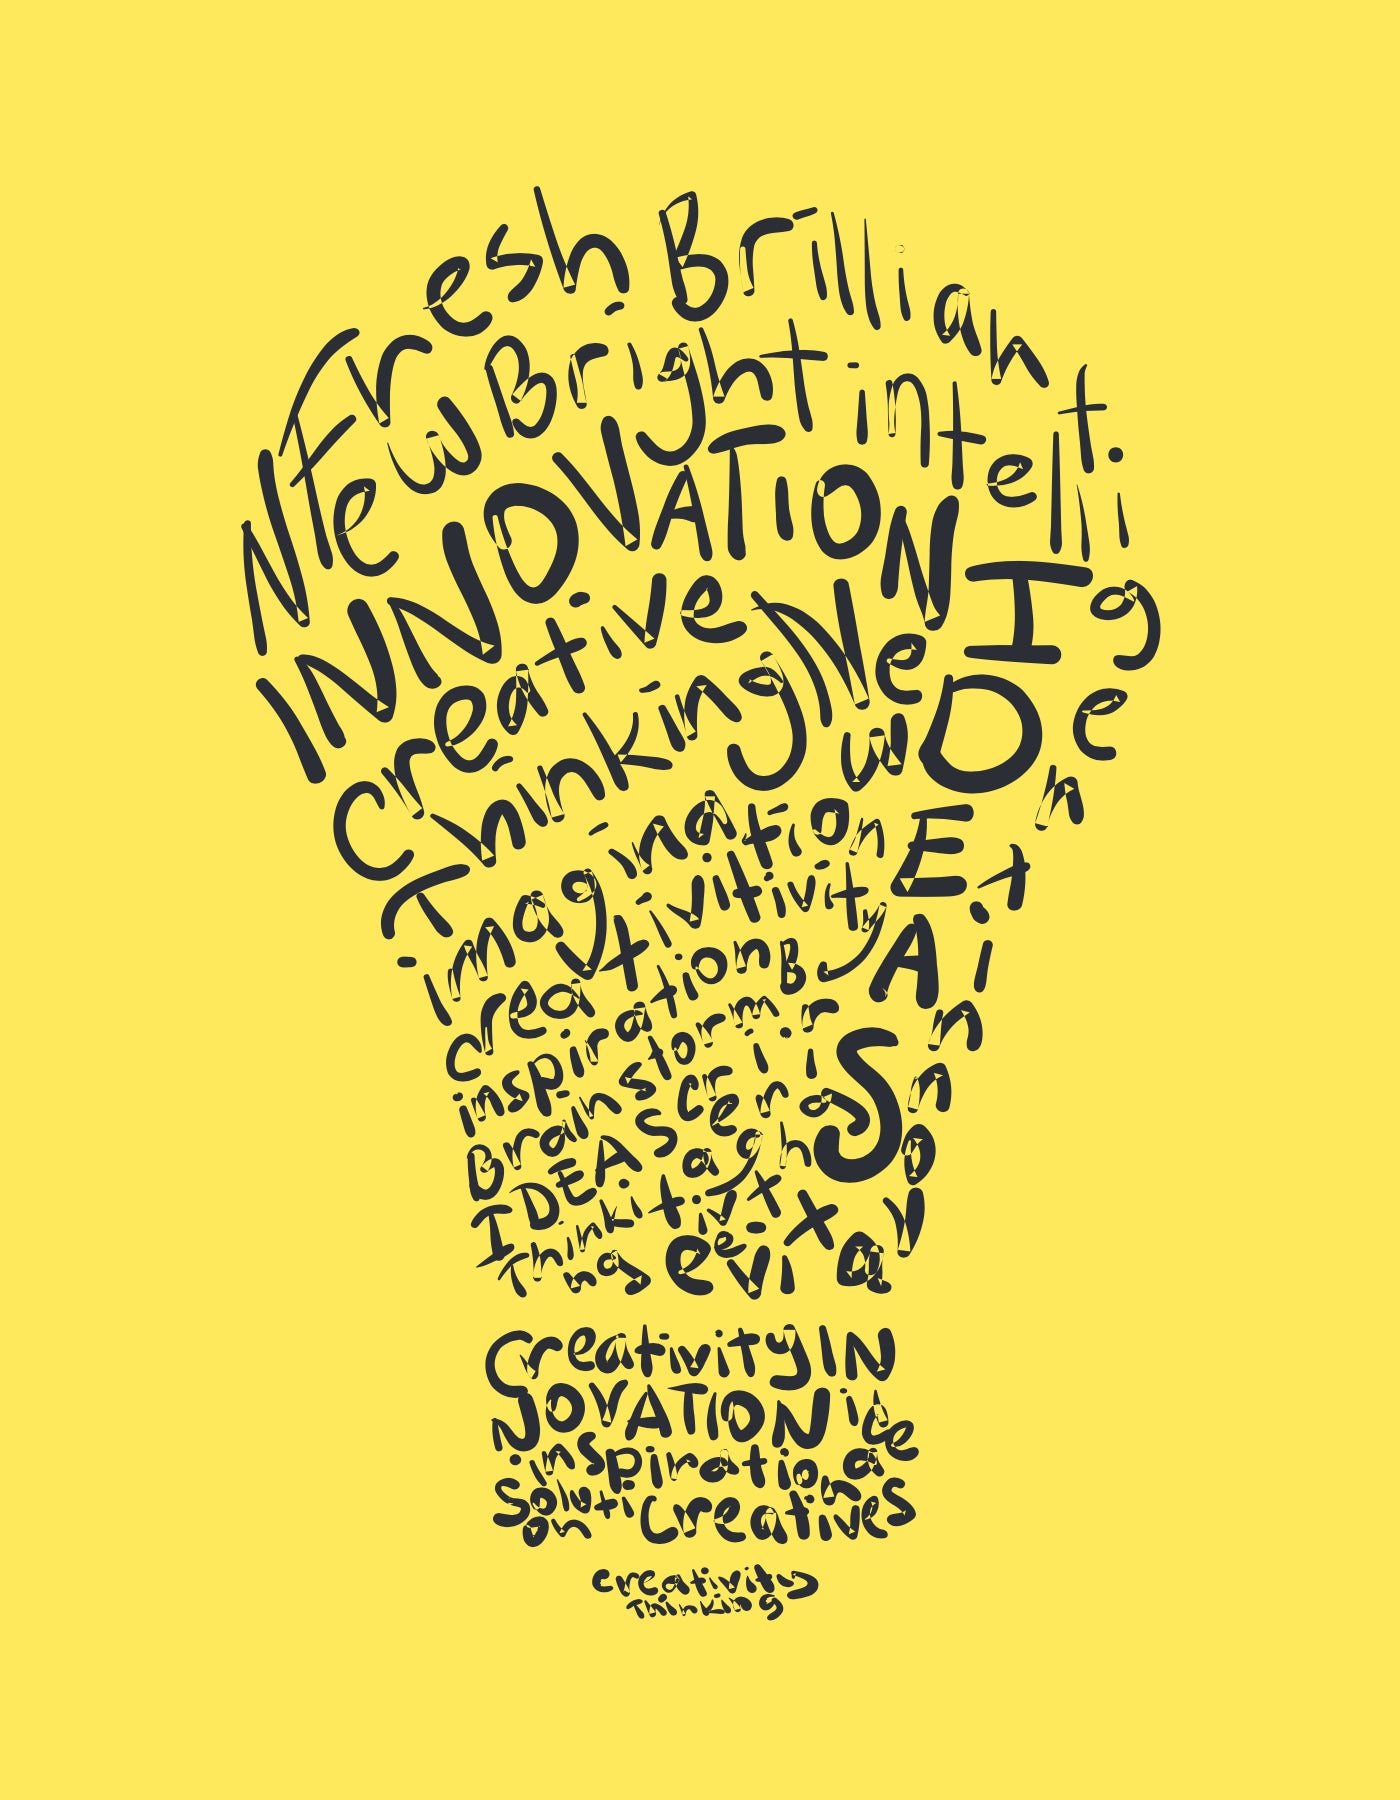 Lightbulb innovation fresh new brilliant creative - product page